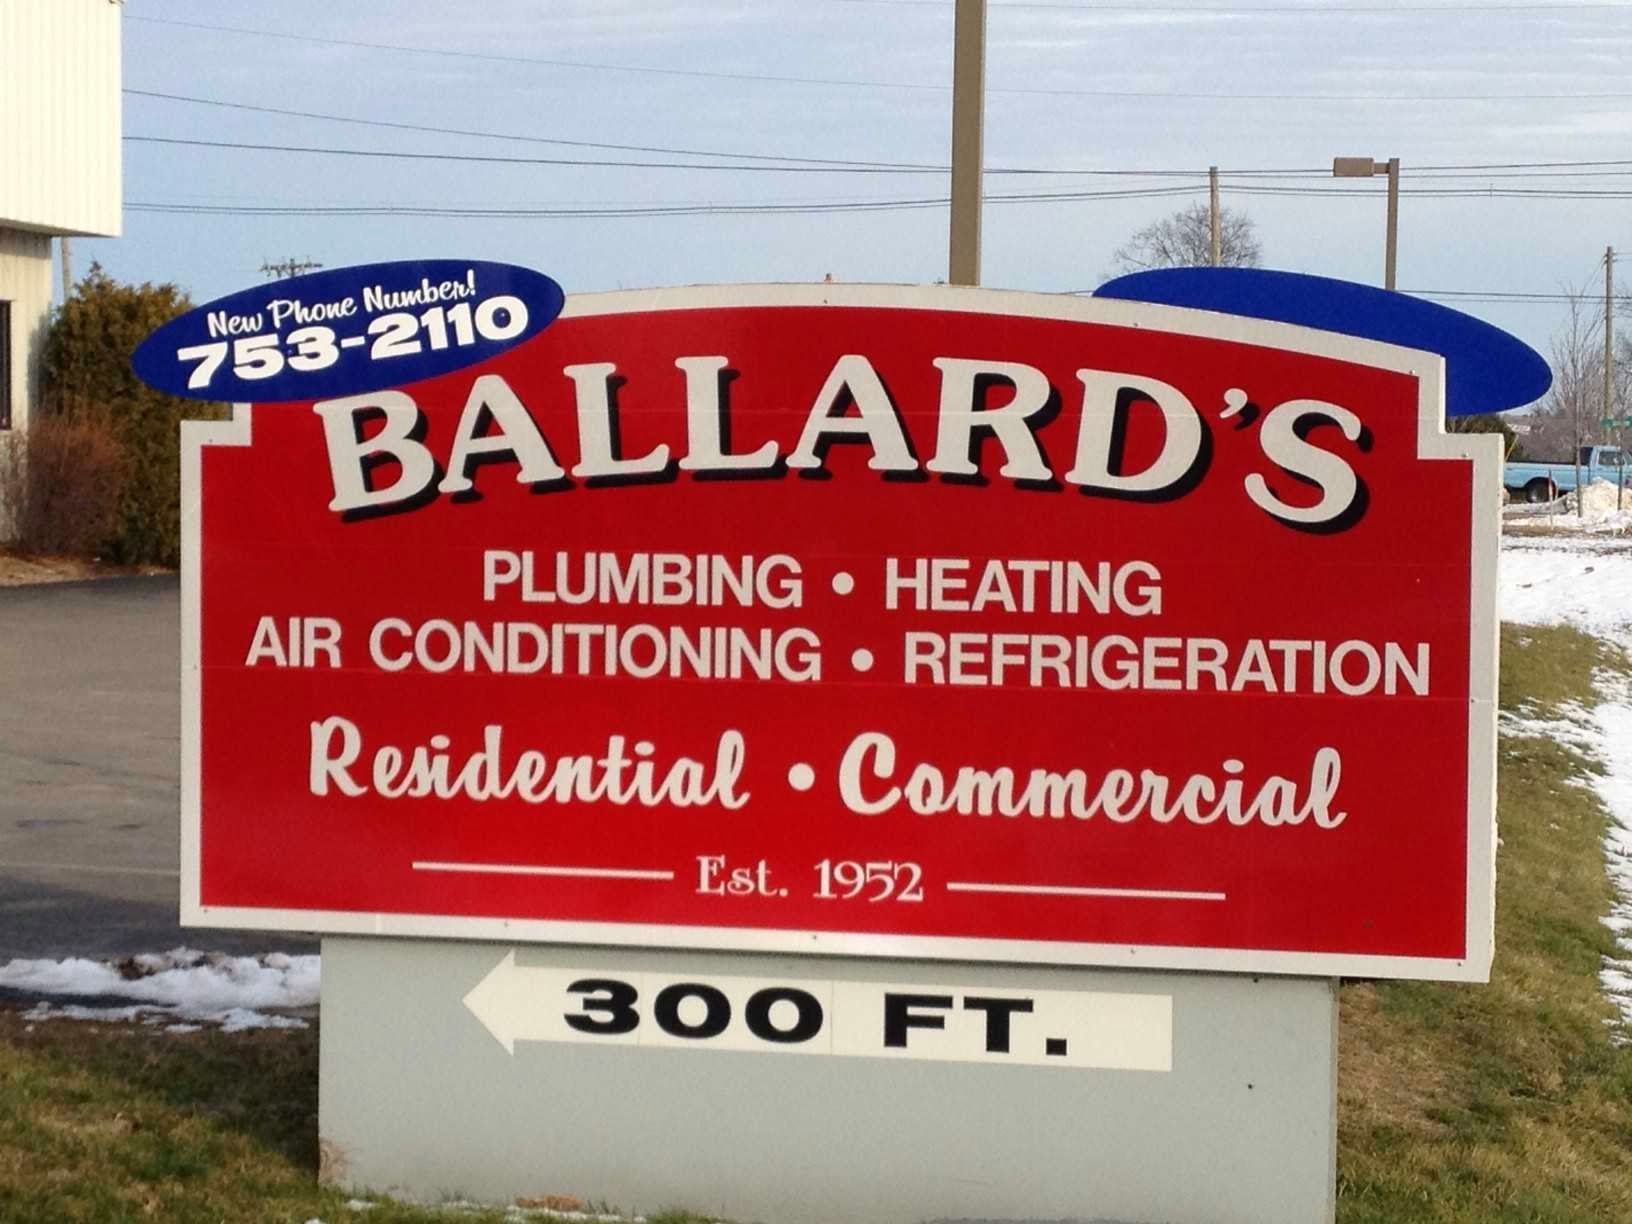 Ballard's Plumbing, Heating, and Air Conditioning